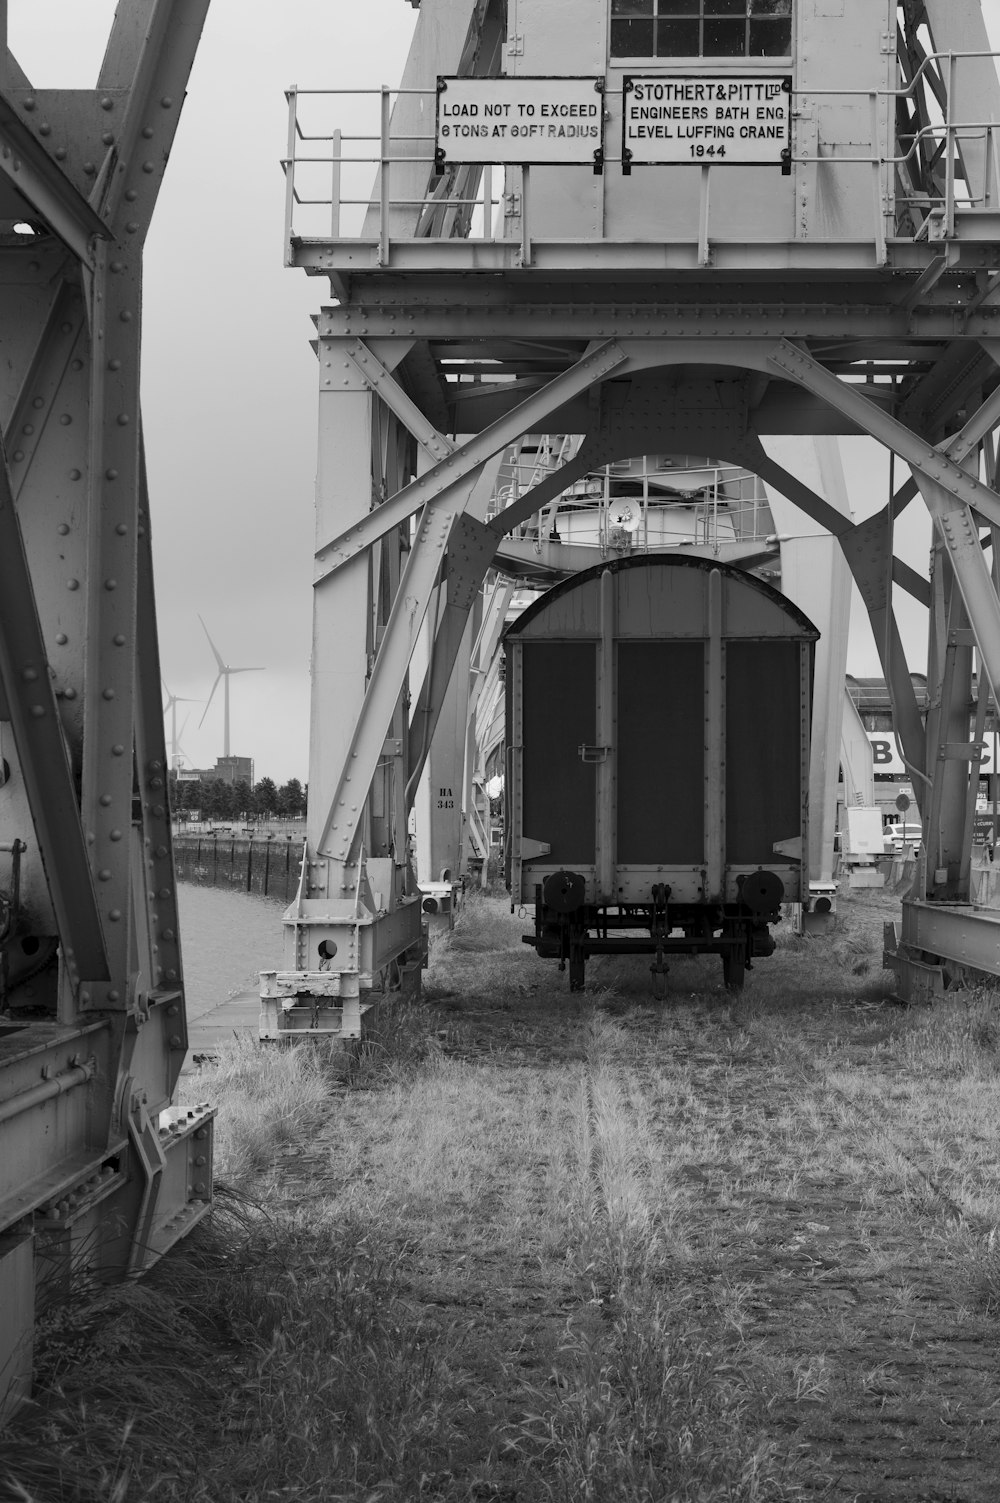 grayscale photo of a metal bridge